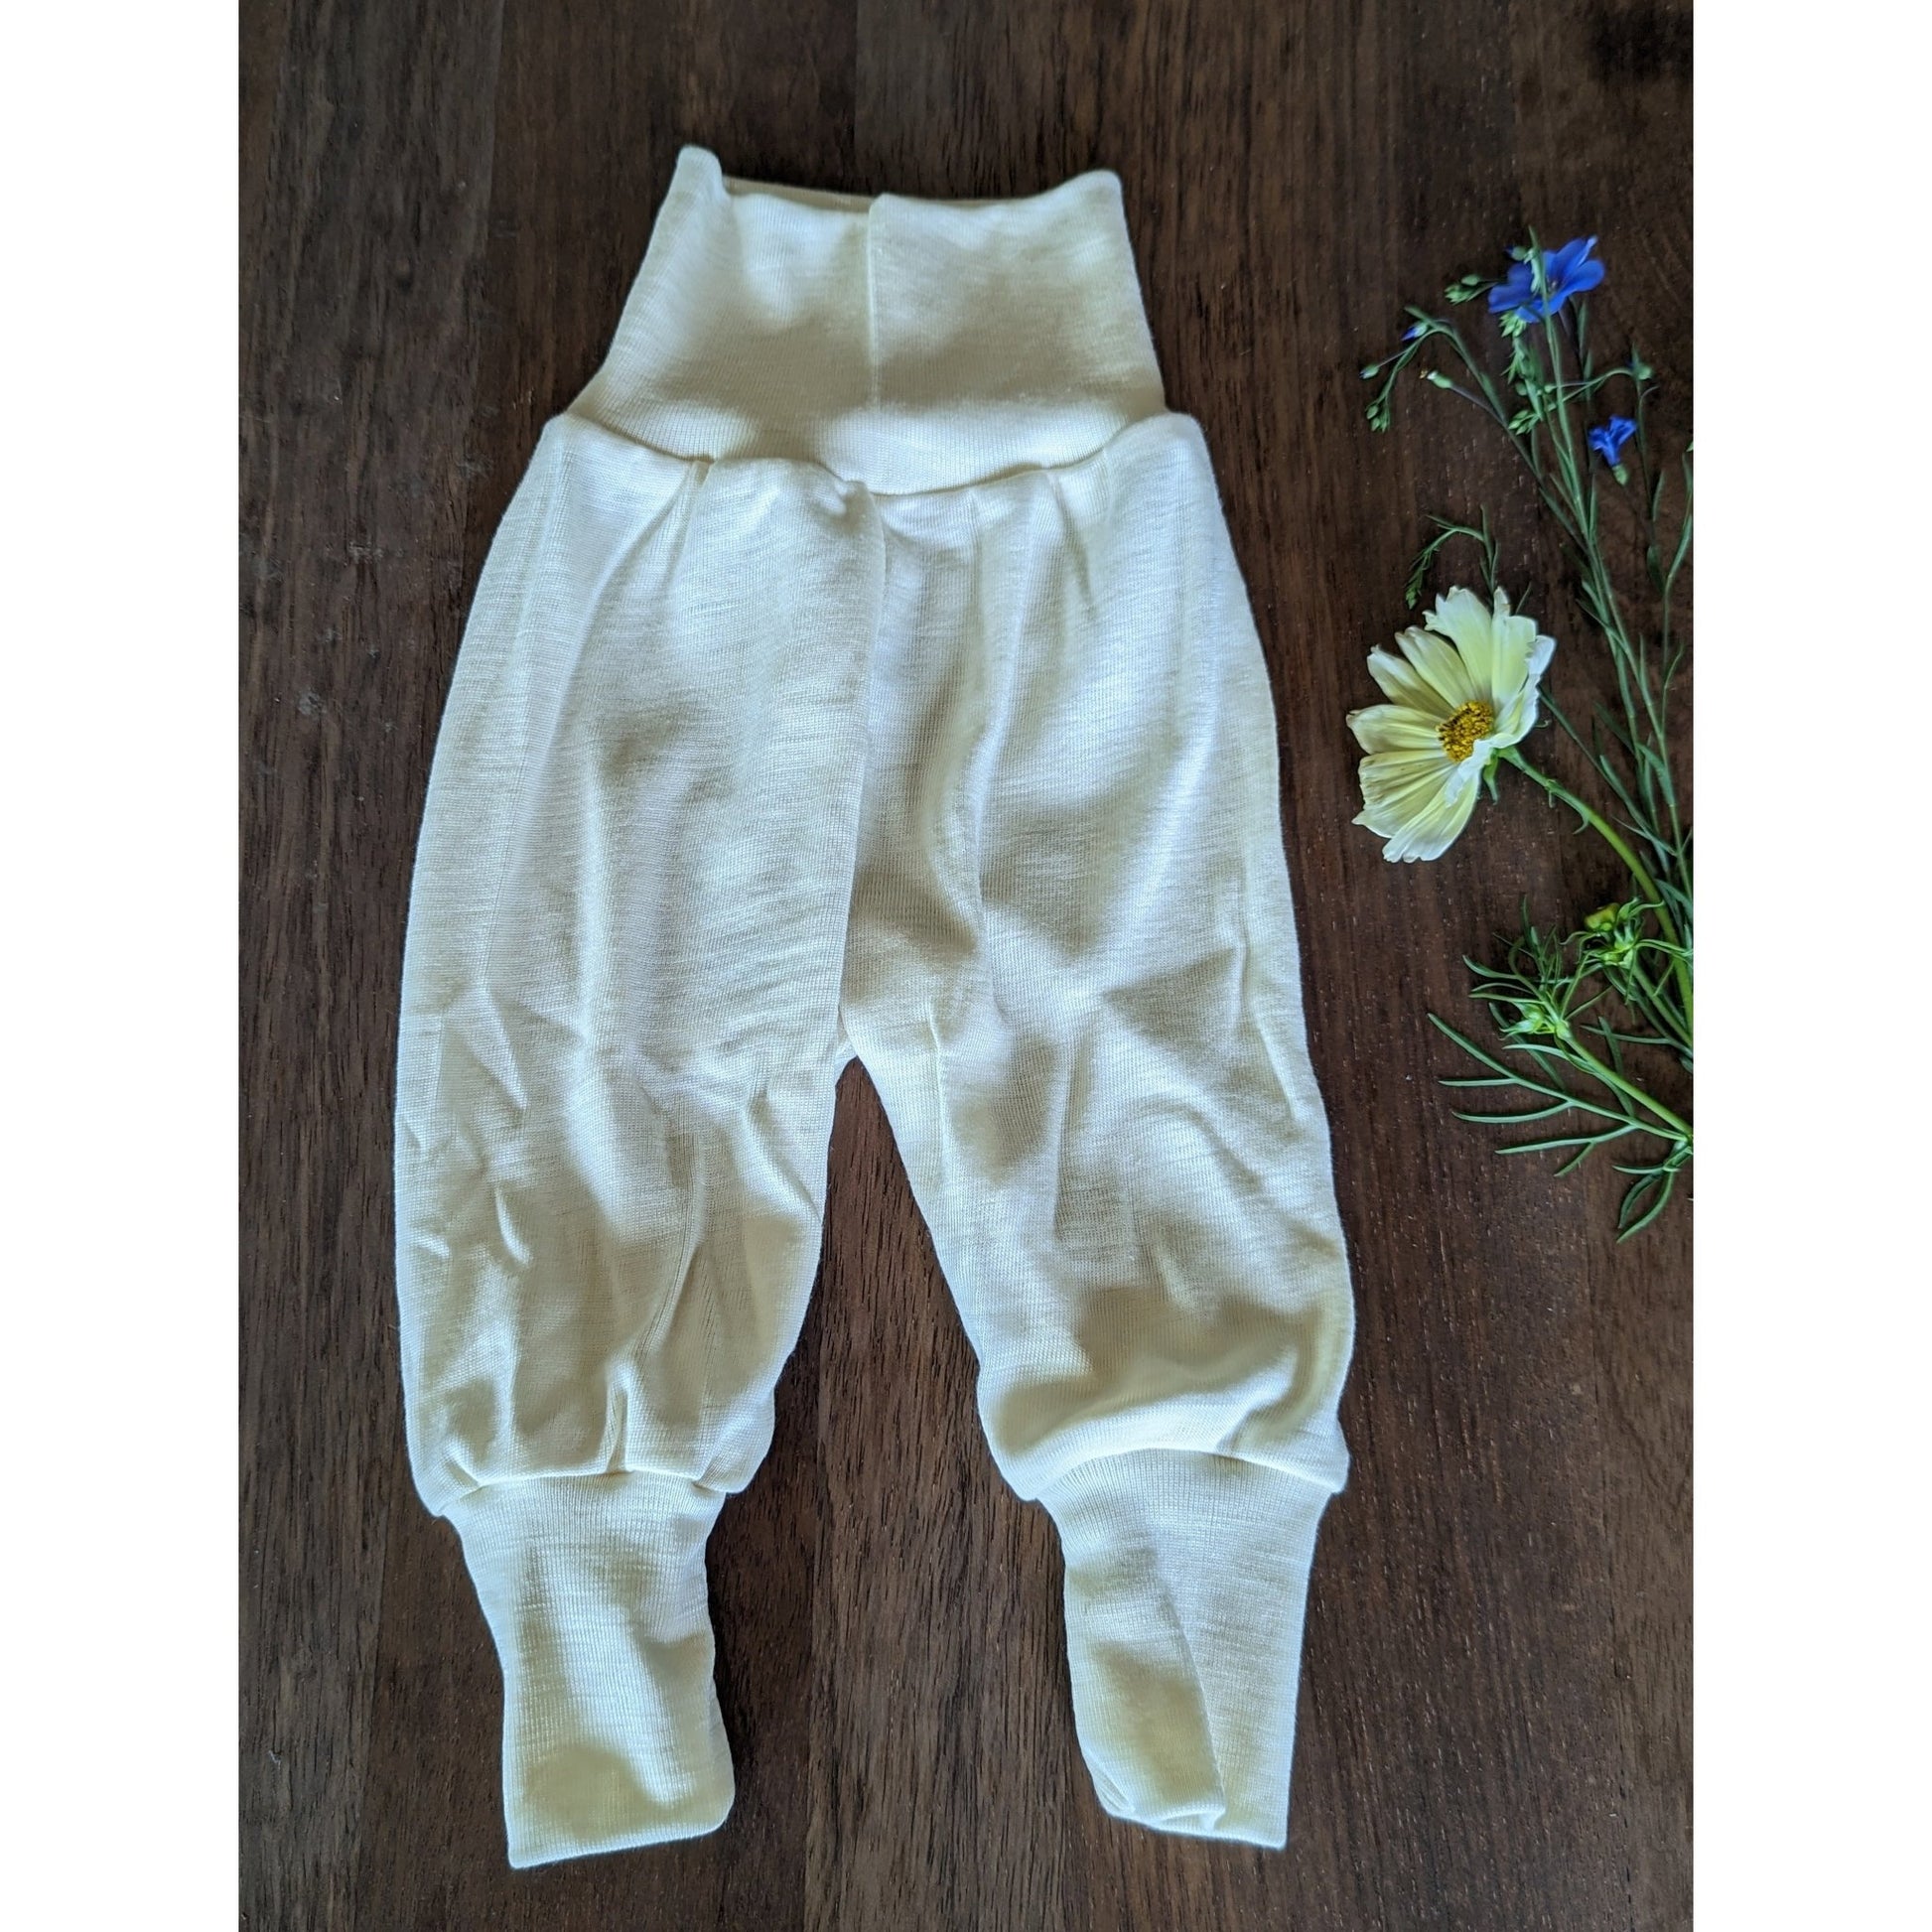 Engel Wool Fleece Baby Pants Cherry Red - Merino Wool Clothes for Babies -  Ava's Appletree